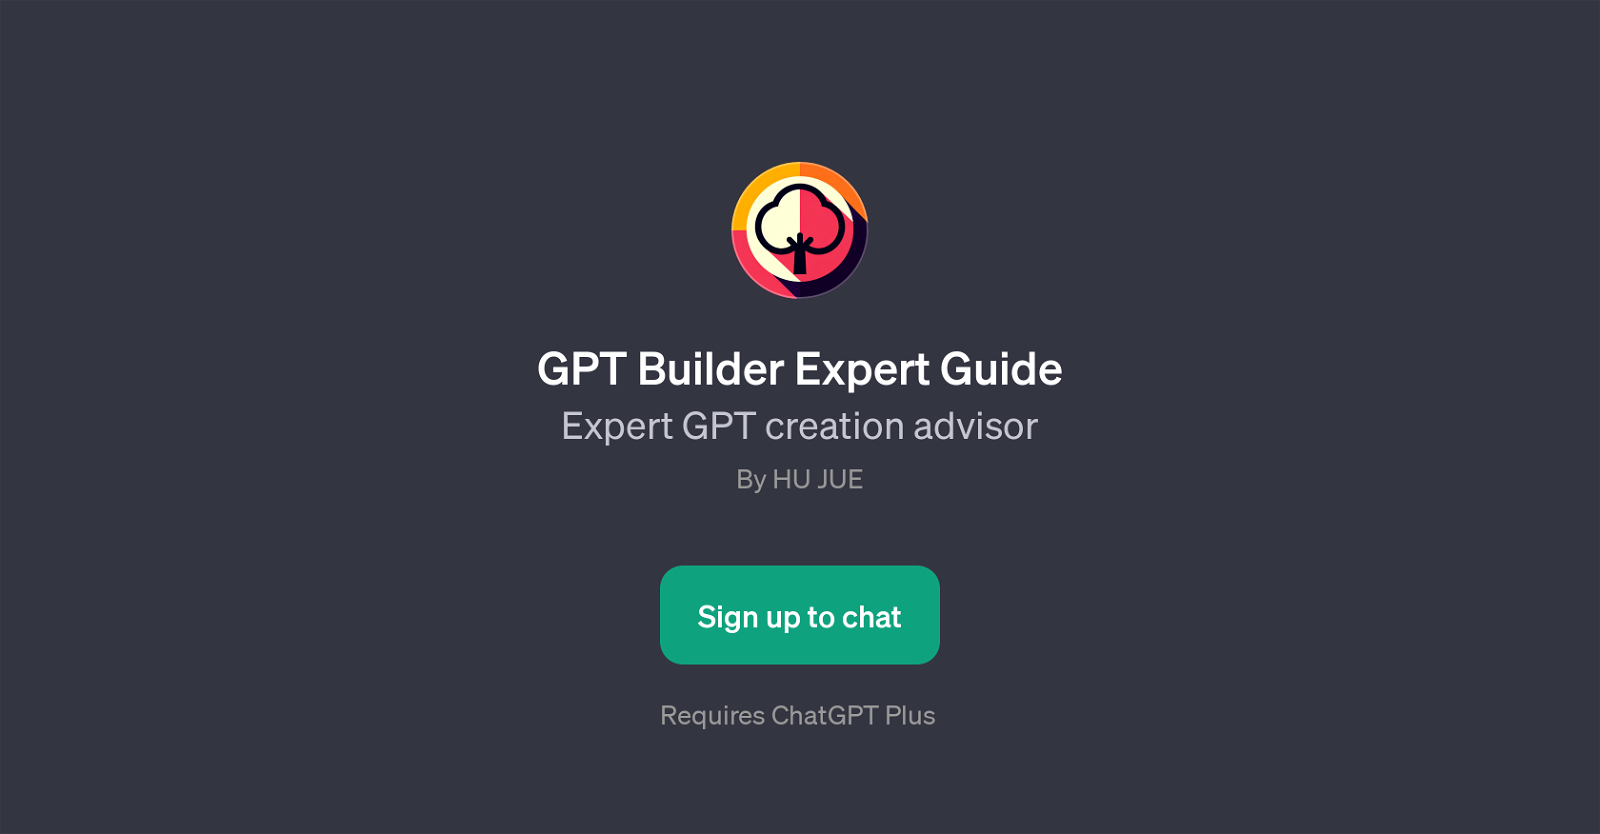 GPT Builder Expert Guide website